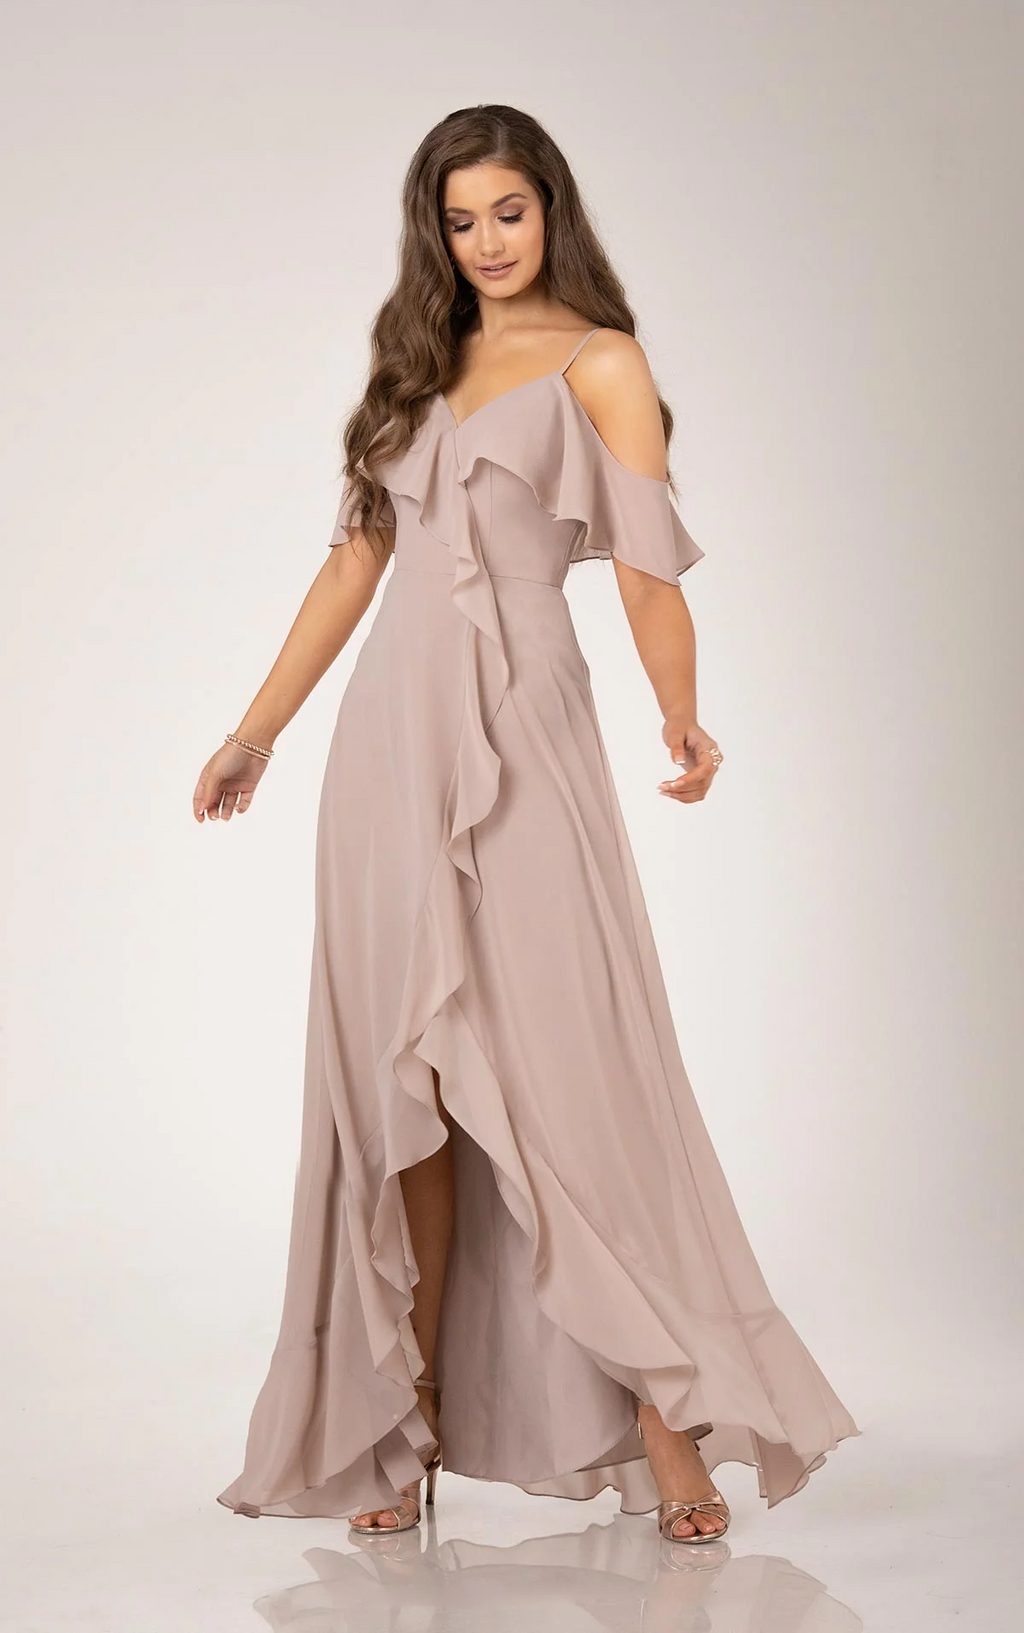 Sorella Vita Dress Style 9398 (Rosewood-Size 10) Prom, Ball., Black-tie, Bridesmaid, Pageant